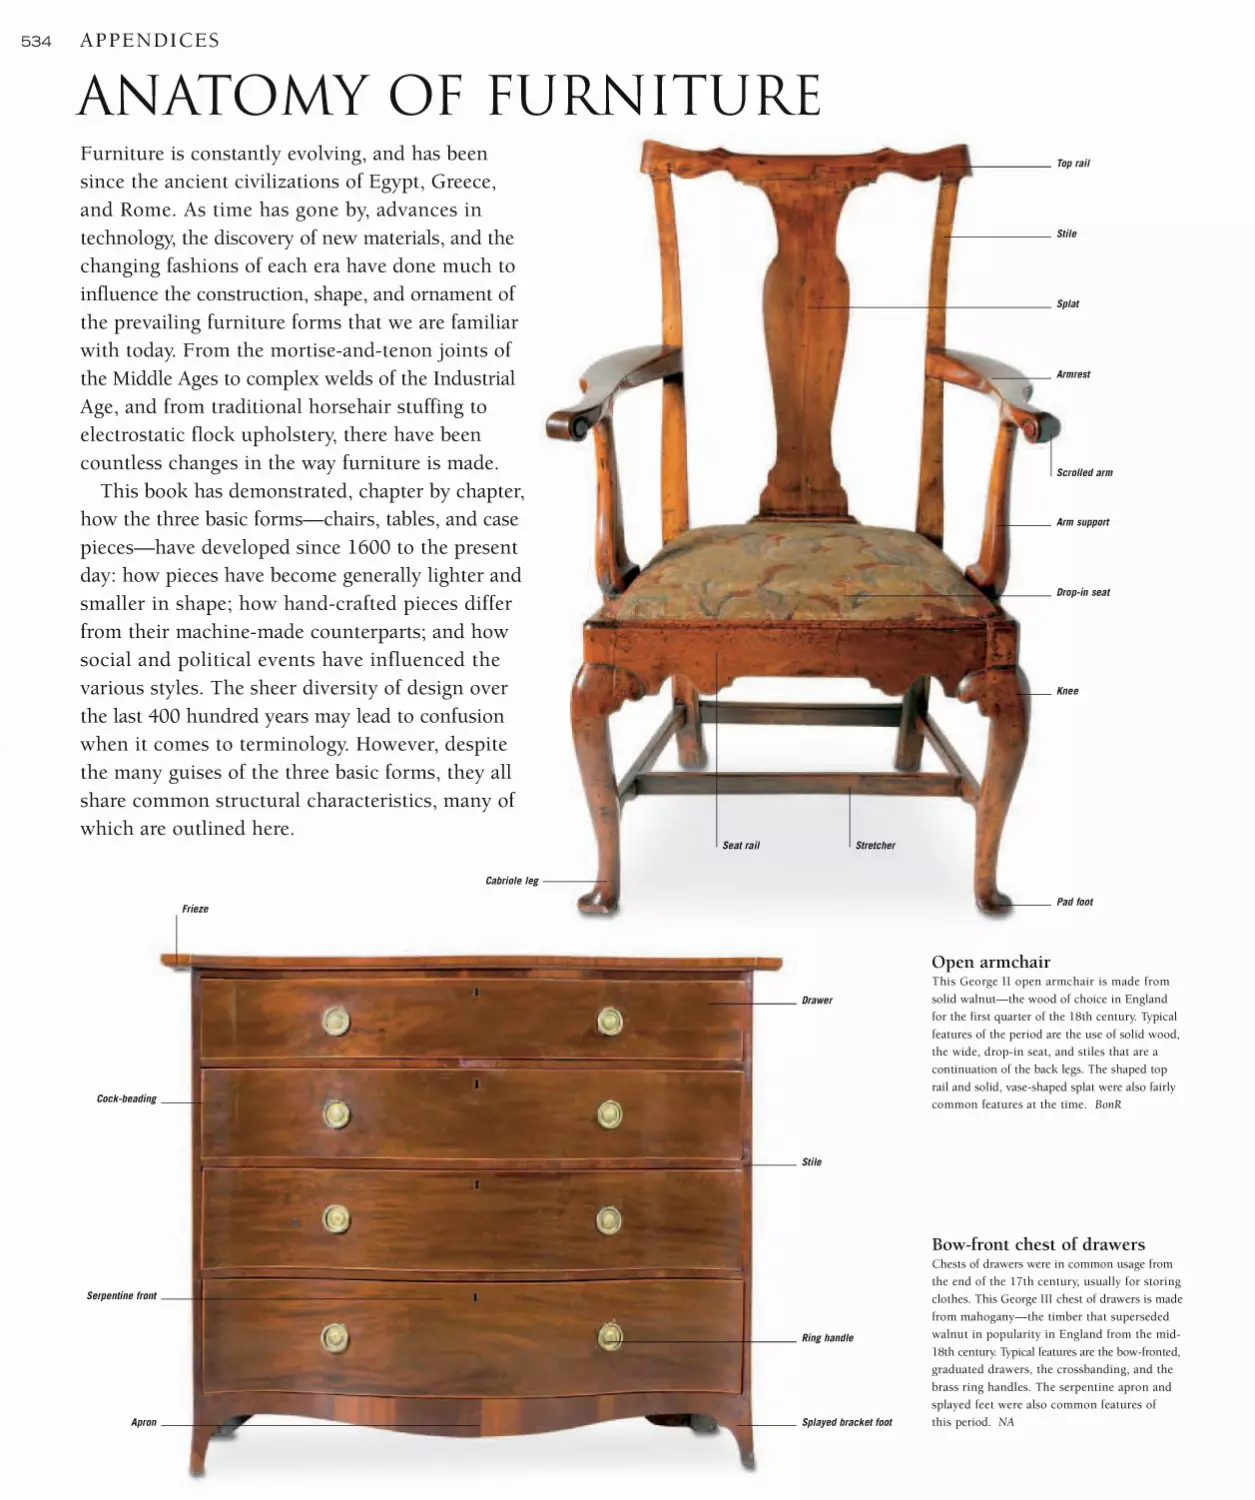 534 Anatomy of Furniture